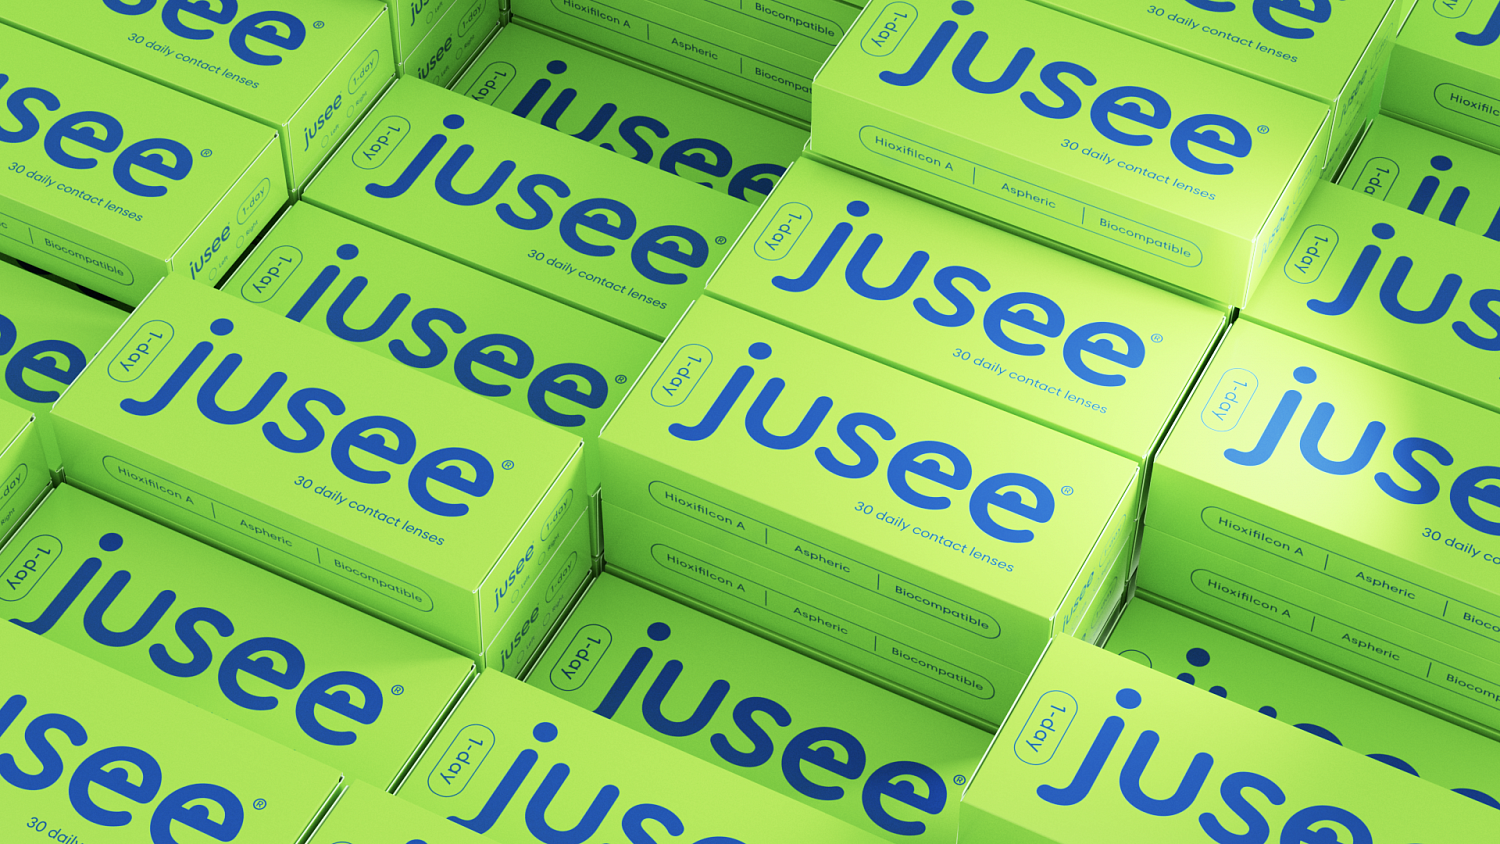 Jusee - Портфолио Depot